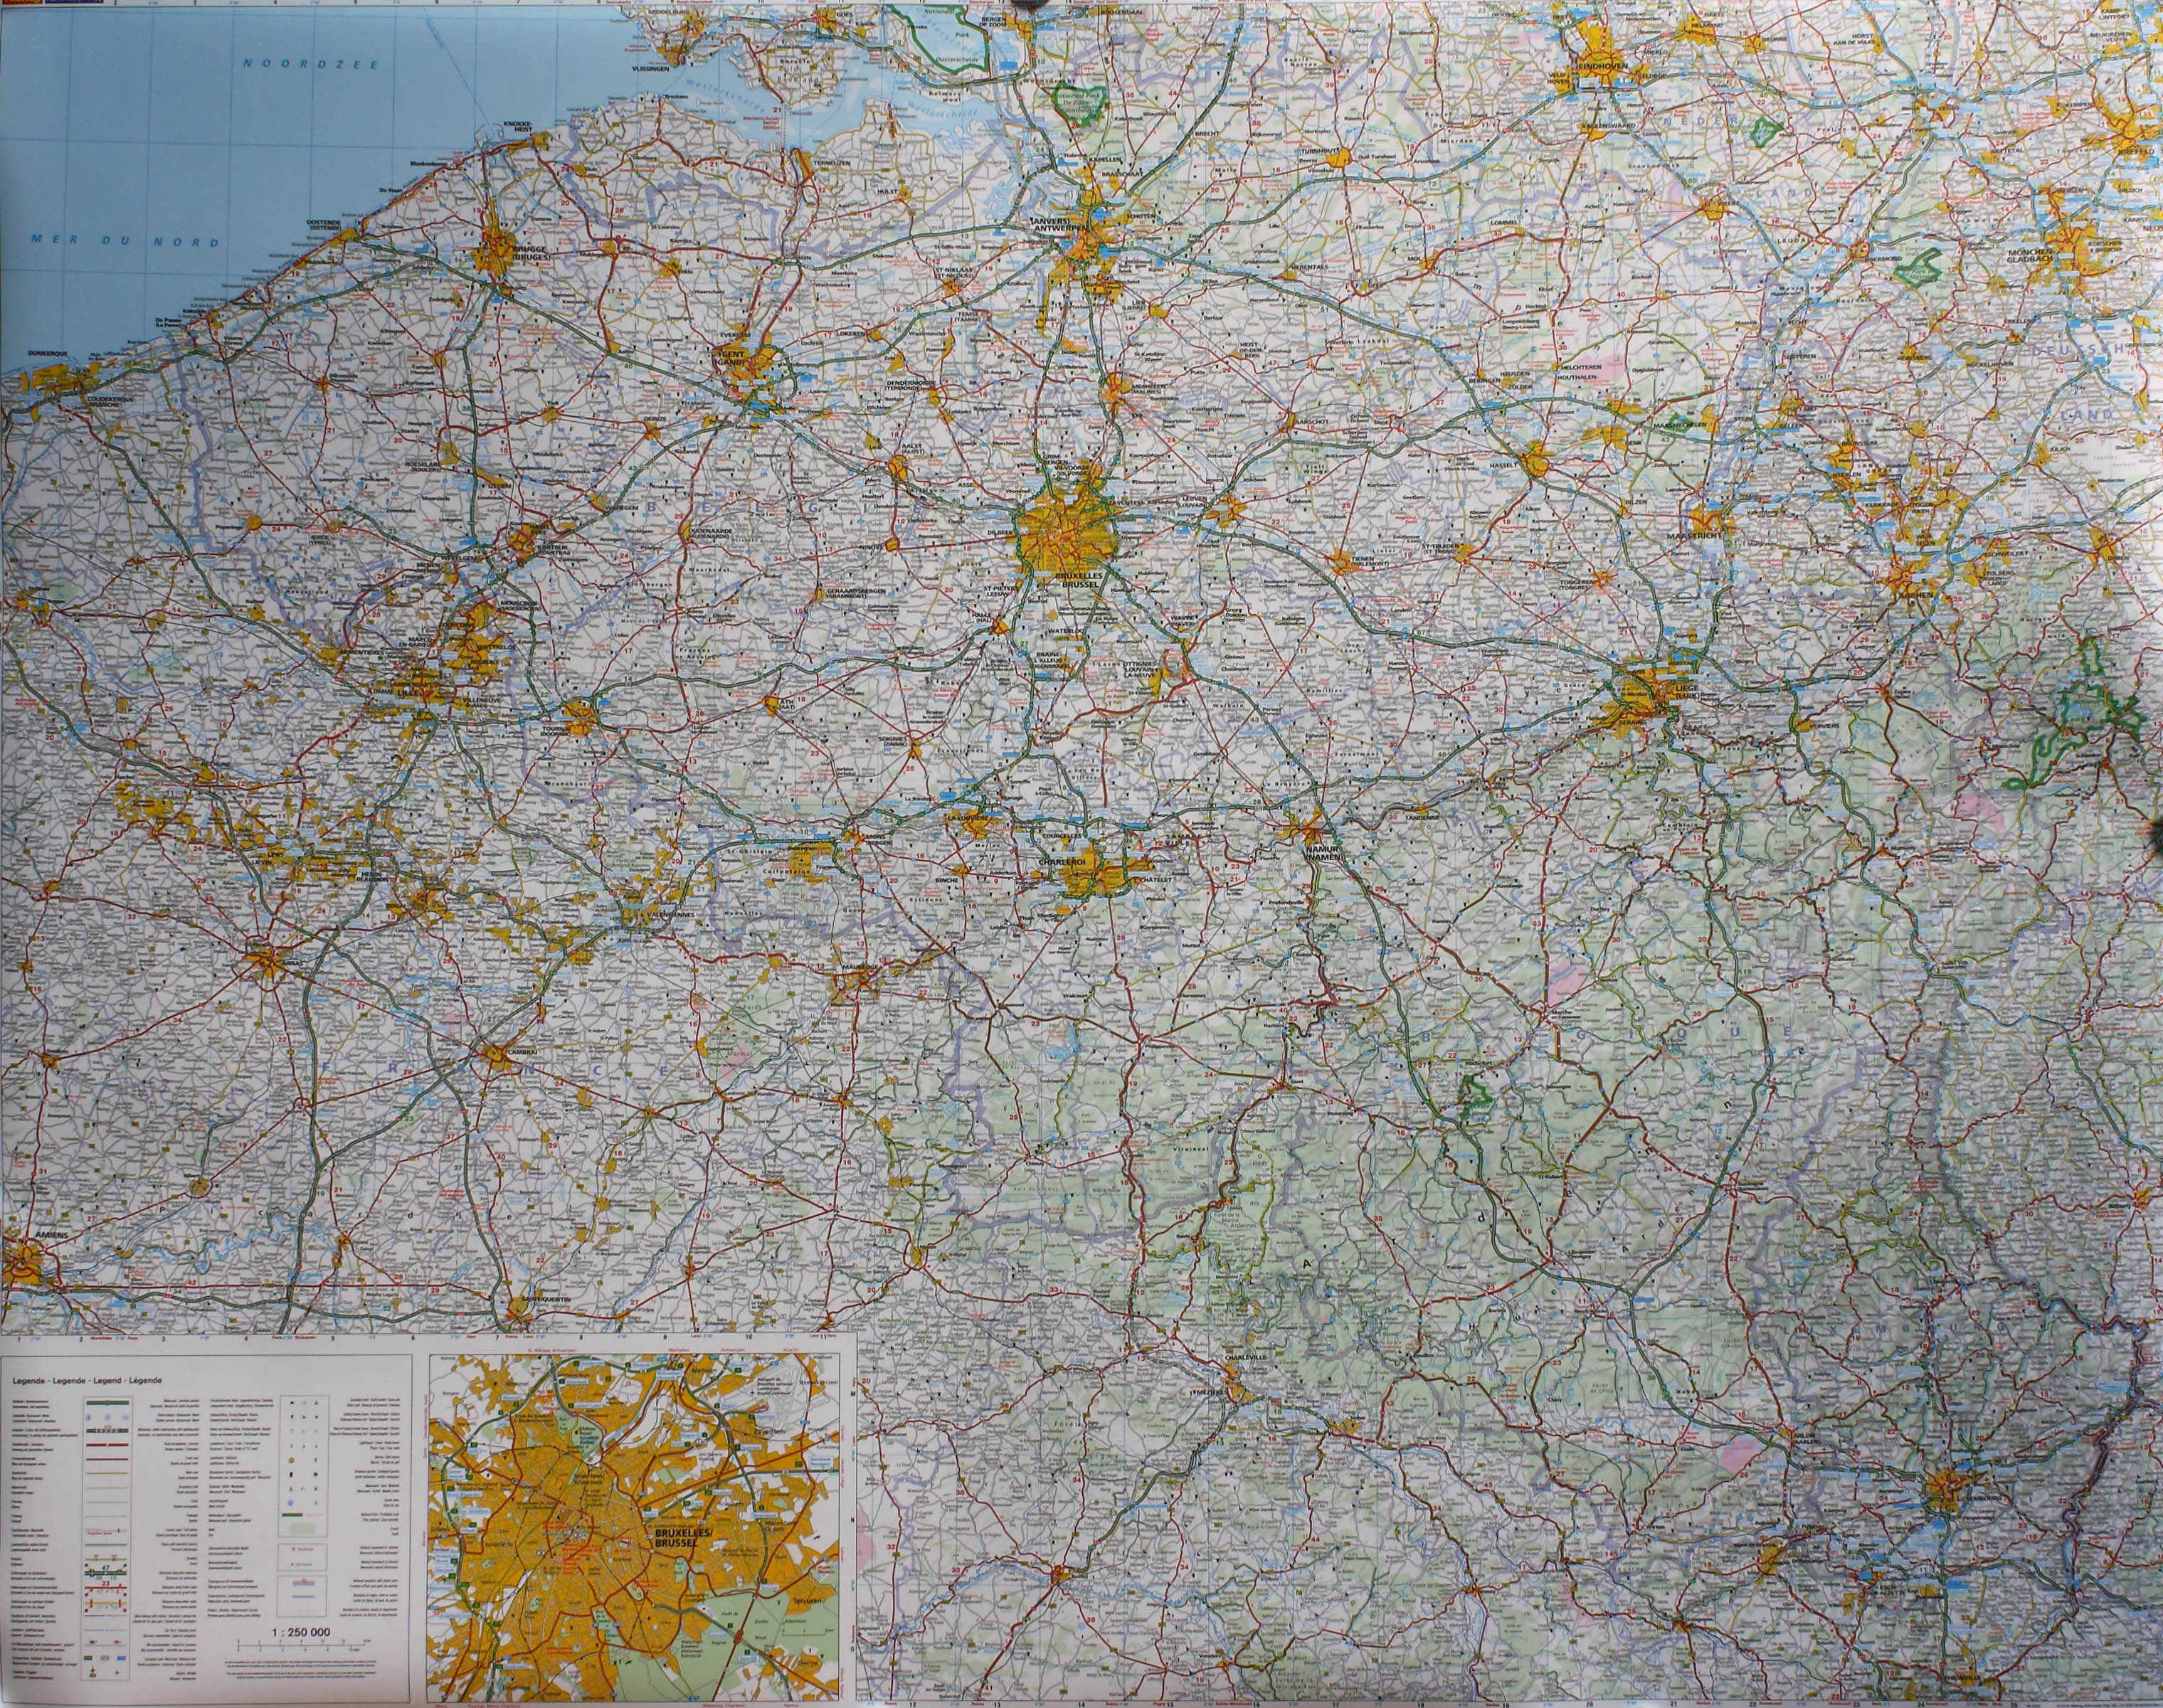 Online bestellen: Wandkaart Belgie & Luxemburg 125 x 99 cm | Hallwag